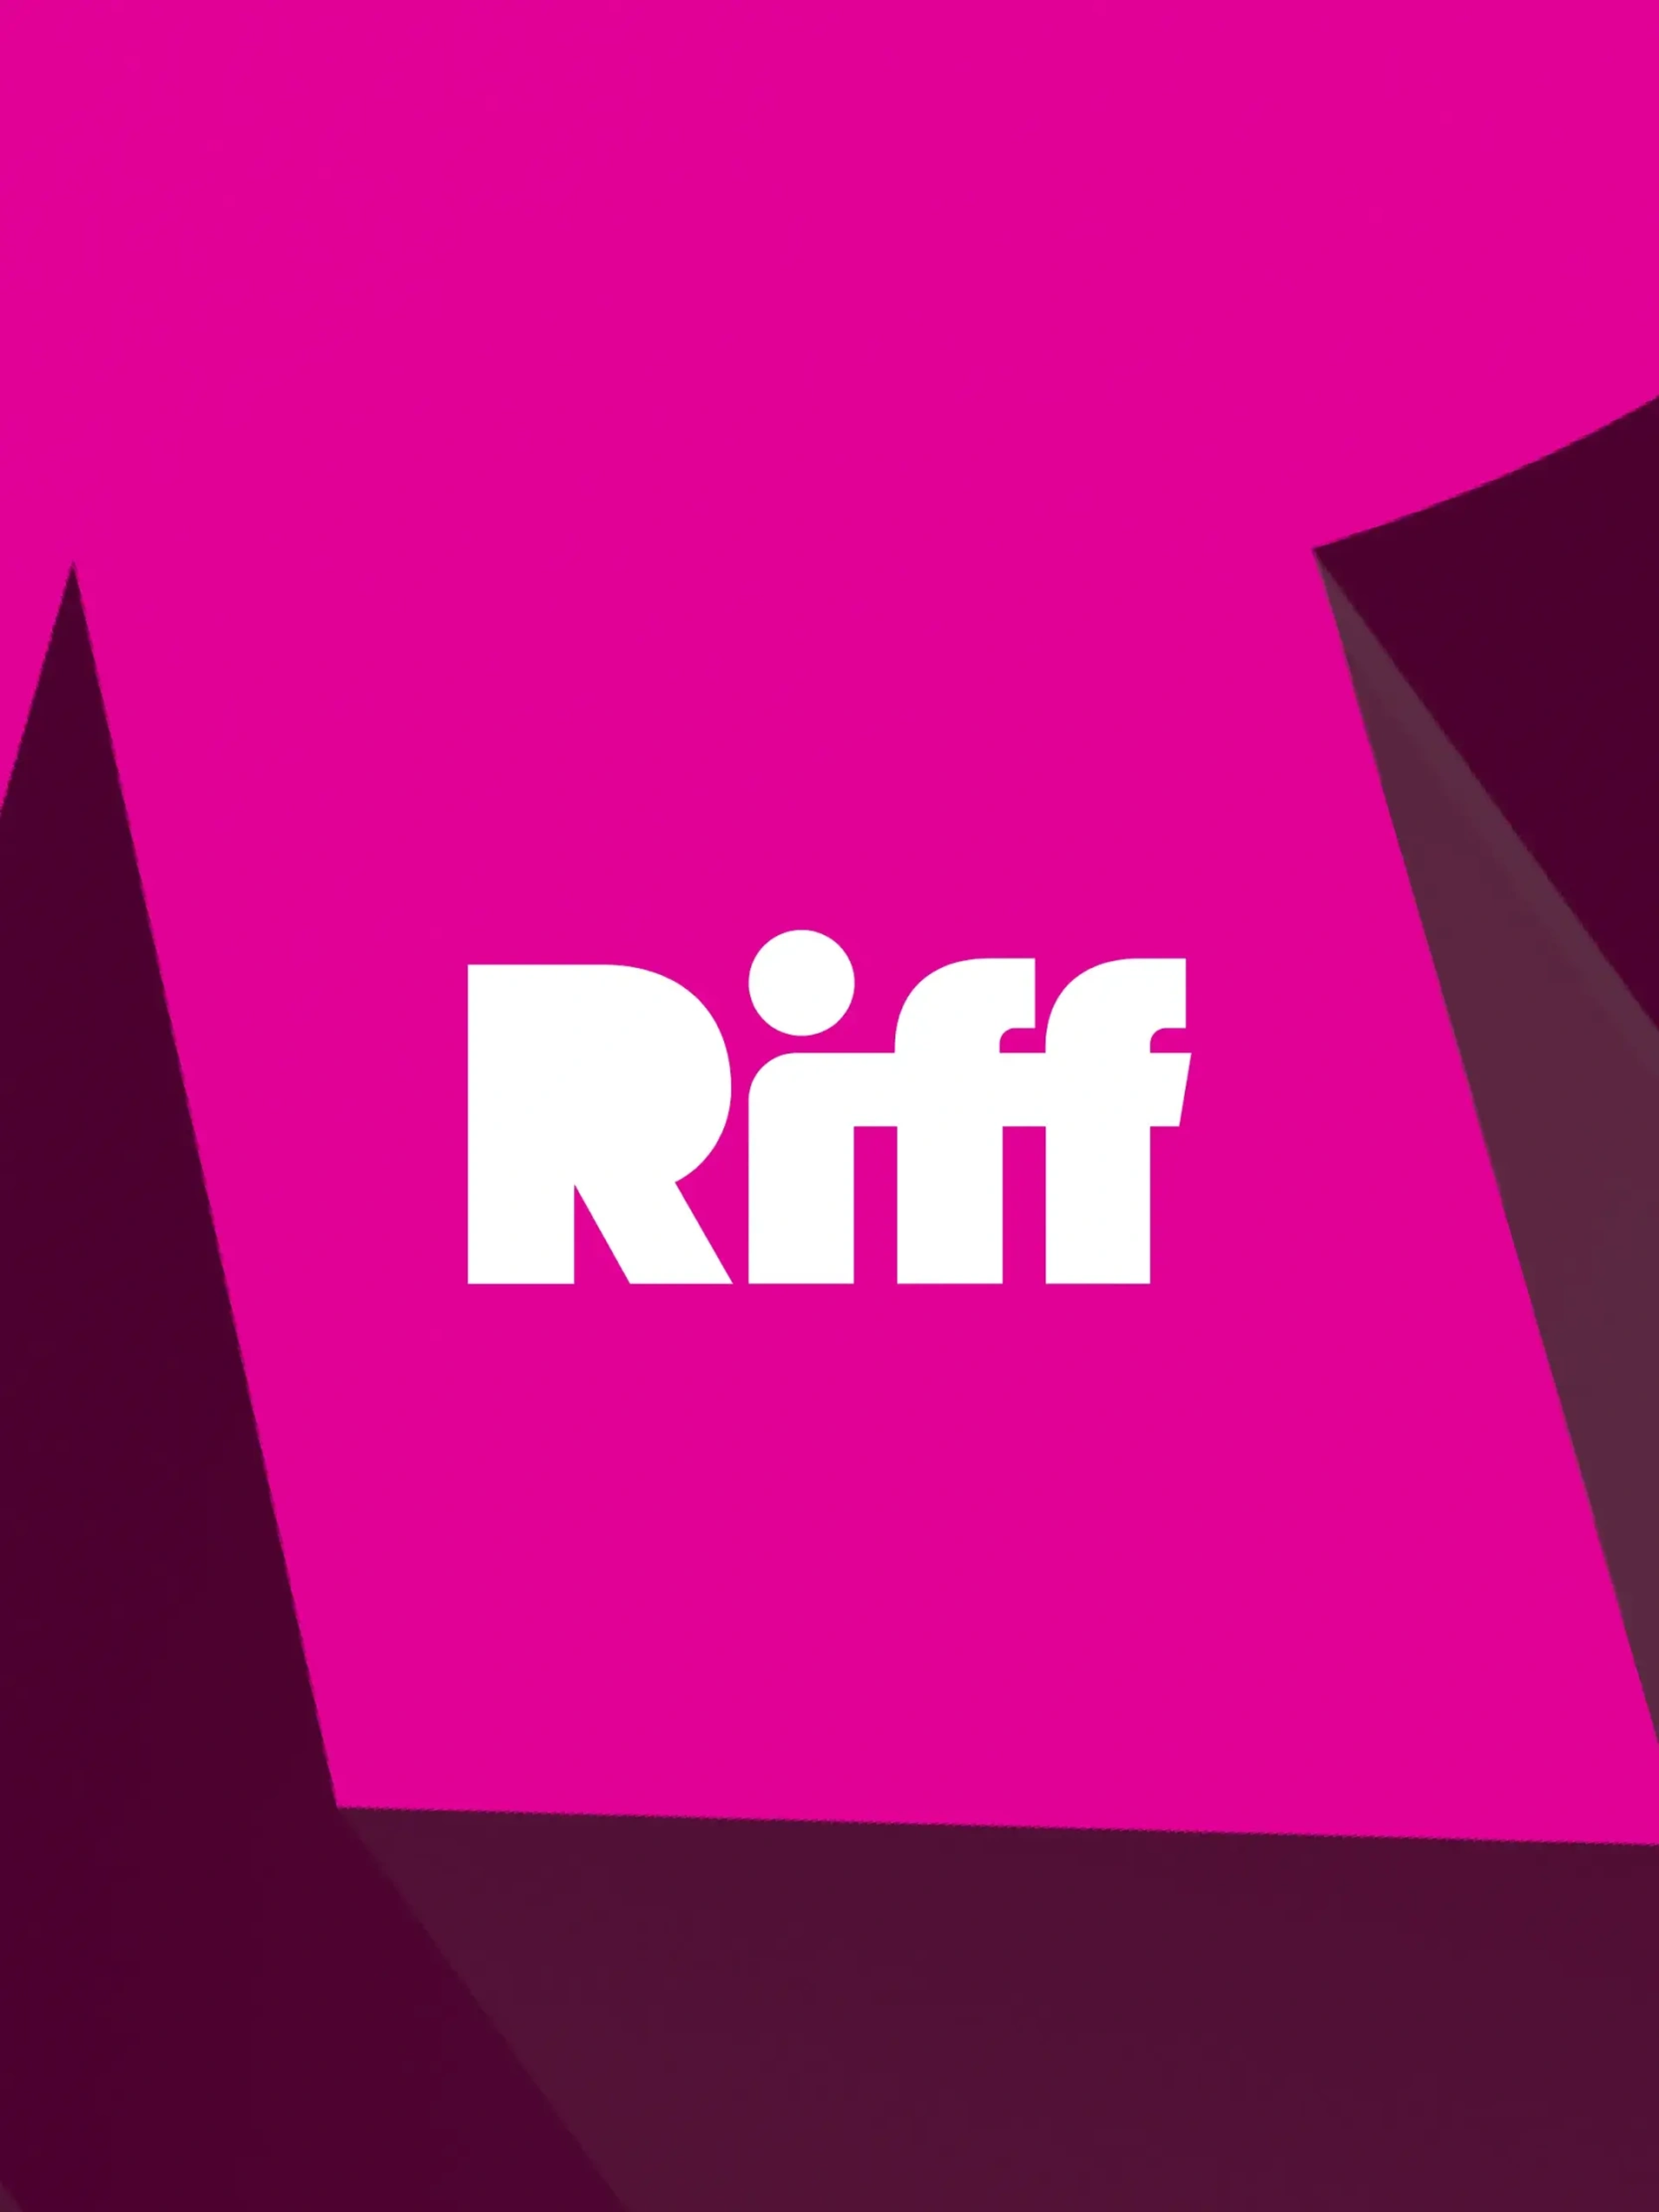 Riff branding wordmark on 3D pink symbol